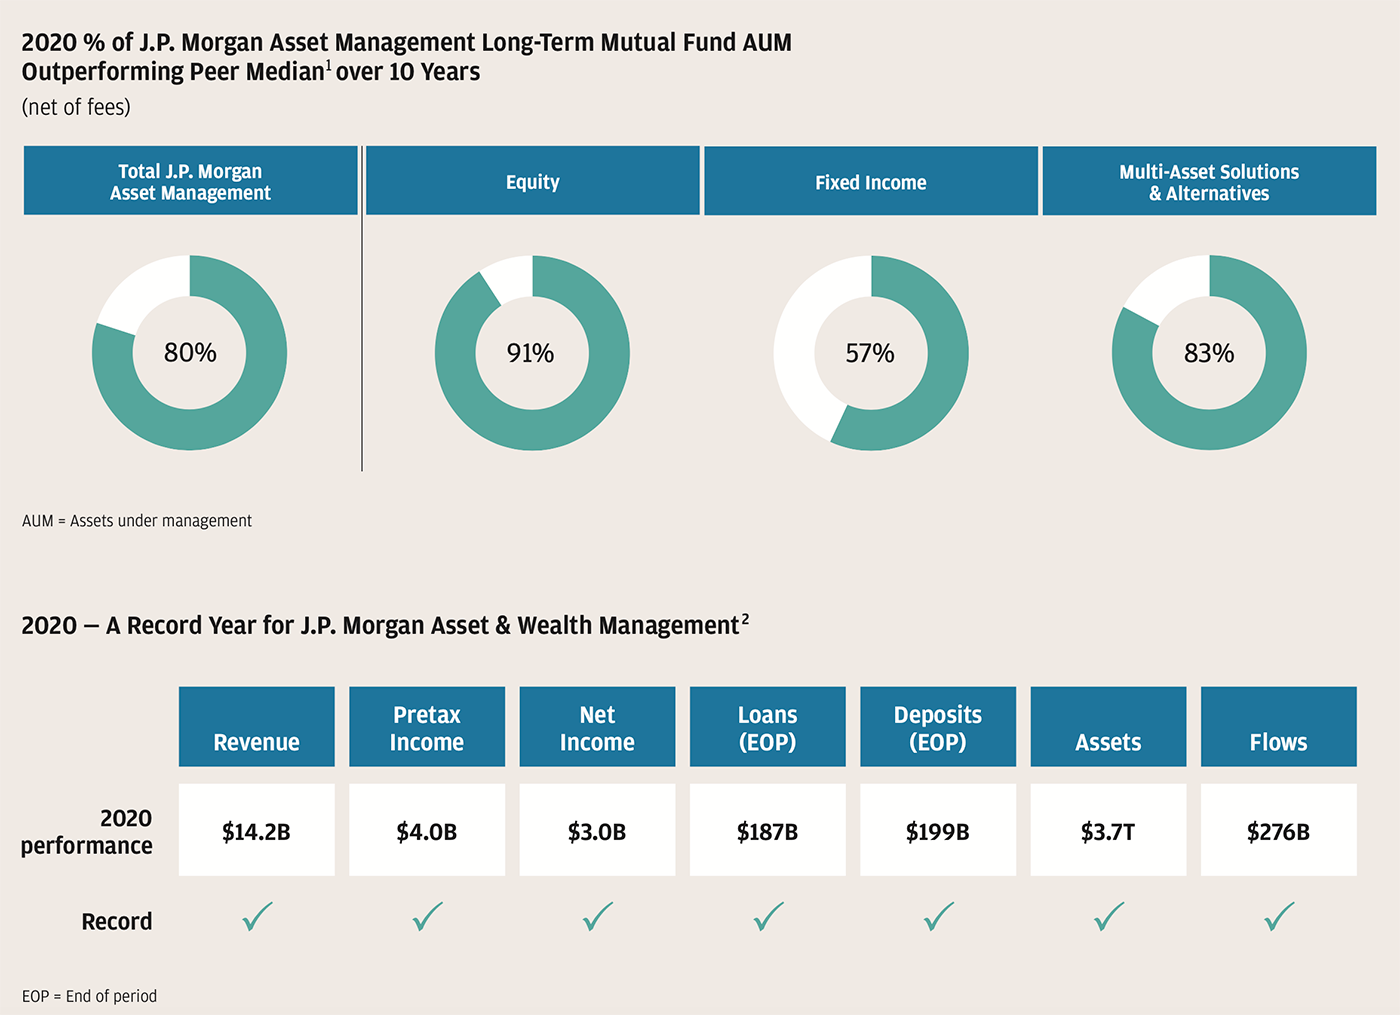 2020 percentage of 10-year J.P. Morgan Asset Management Long-Term Mutual Fund AUM Above Peer Median